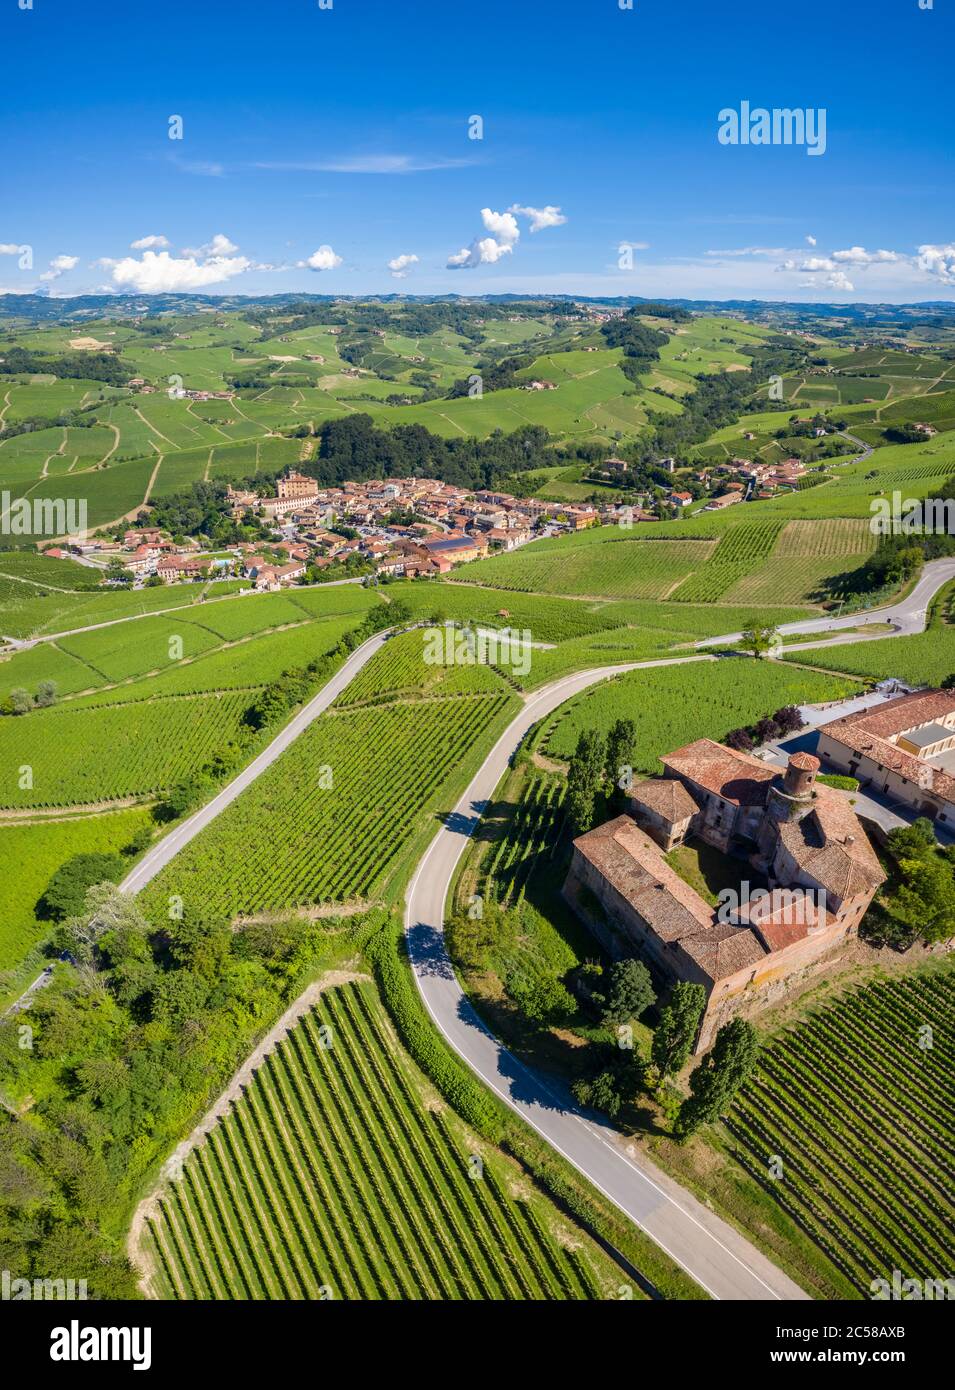 Aerial view of the winding road leading to the Castello di La Volta. Barolo, Barolo wine region, Langhe, Piedmont, Italy, Europe. Stock Photo